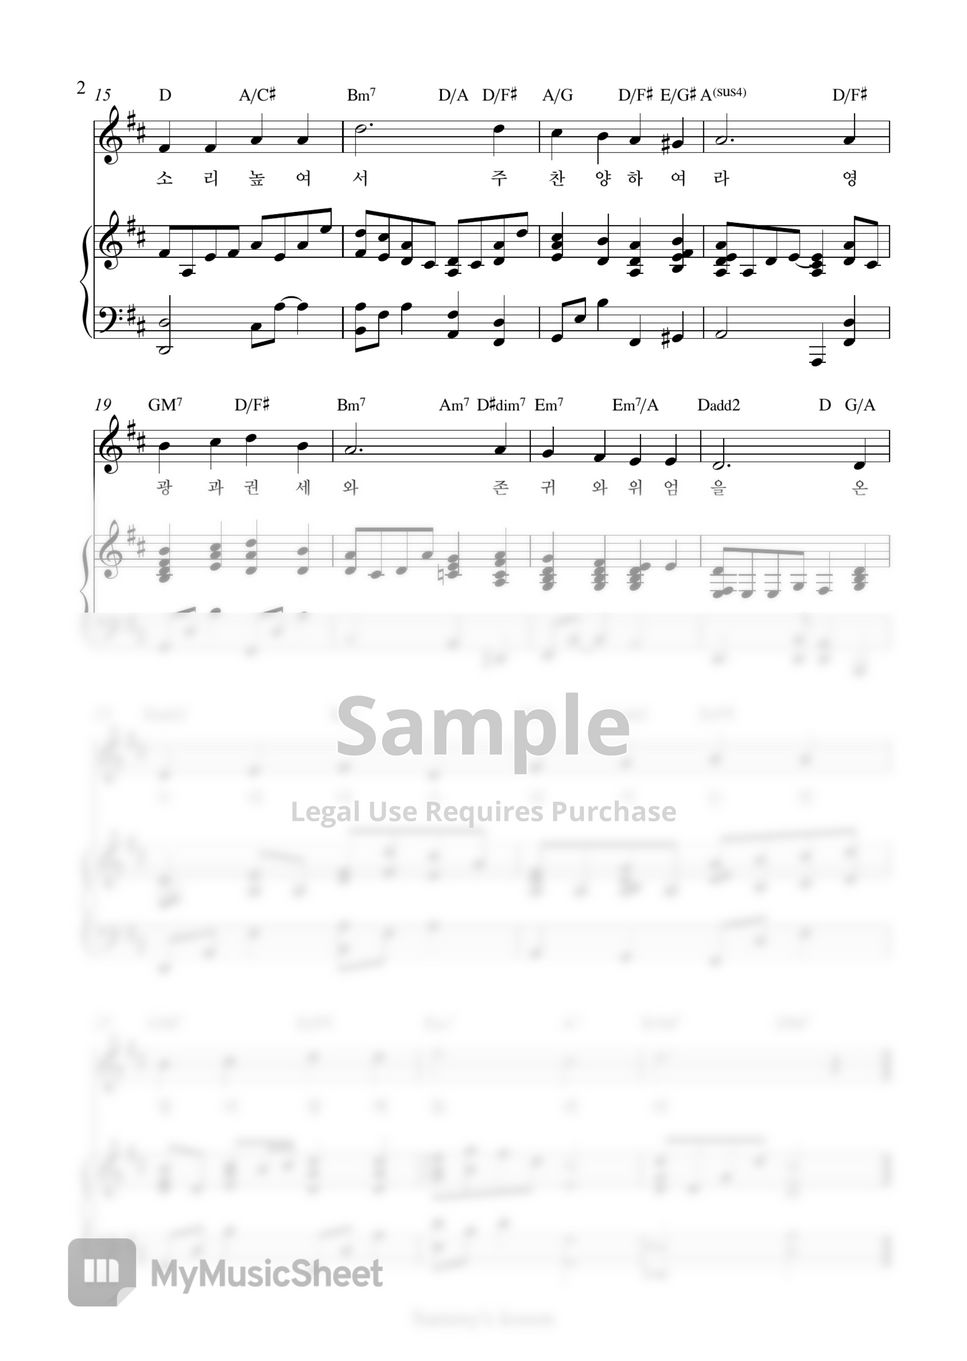 Hymn - 목소리 높여서 (Piano Cover) by Samuel Park